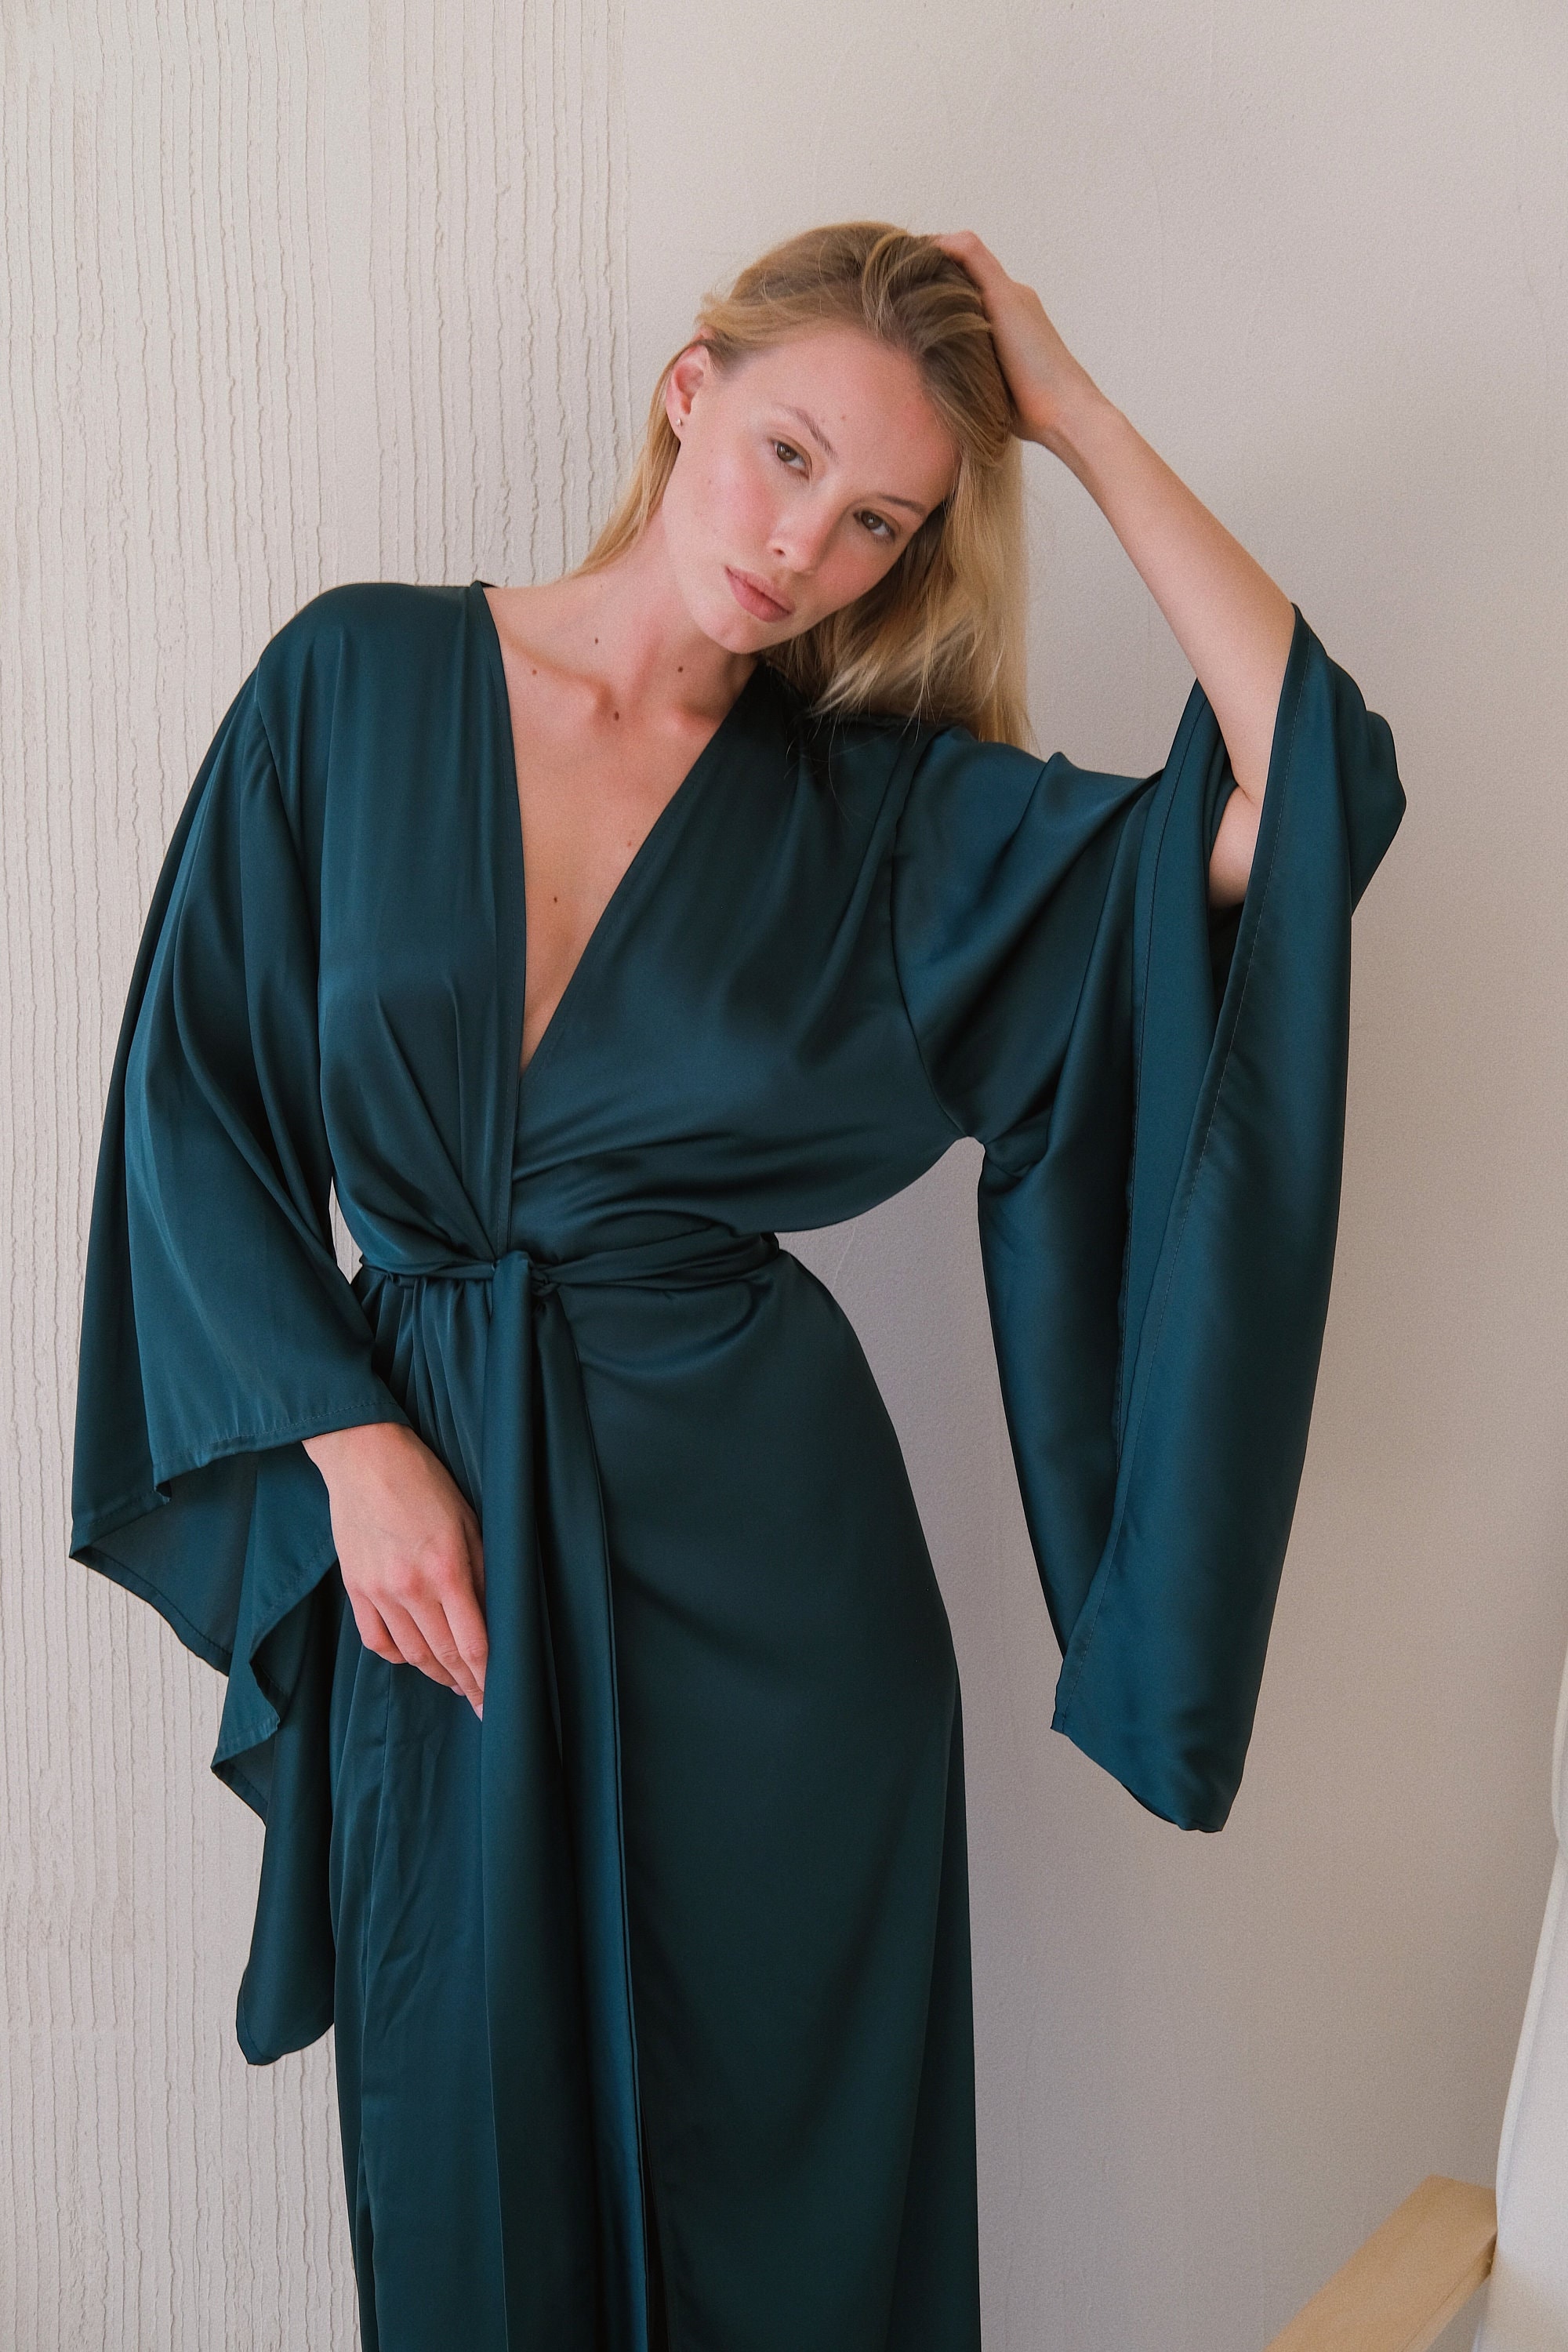 Details about   US Women's Thicker Warmer Nightgown Bathrobe Sweat Kimono Bath Robe Bride Gown